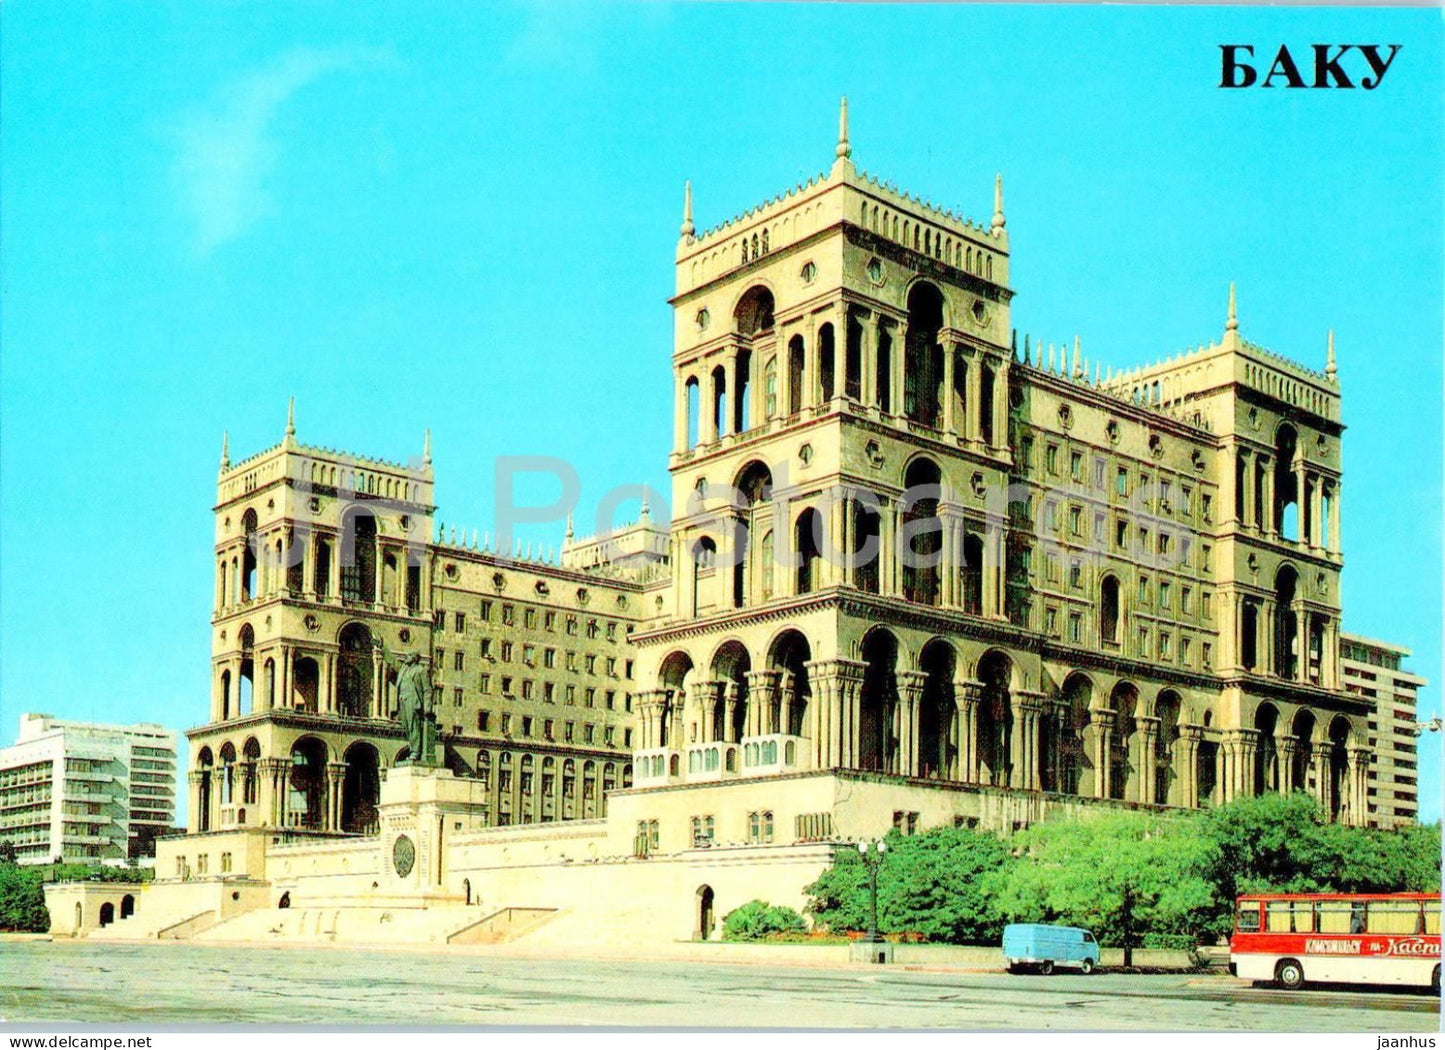 Baku - The building of the Government of the Azebaijan SSR - bus - 1985 - Azerbaijan USSR - unused - JH Postcards